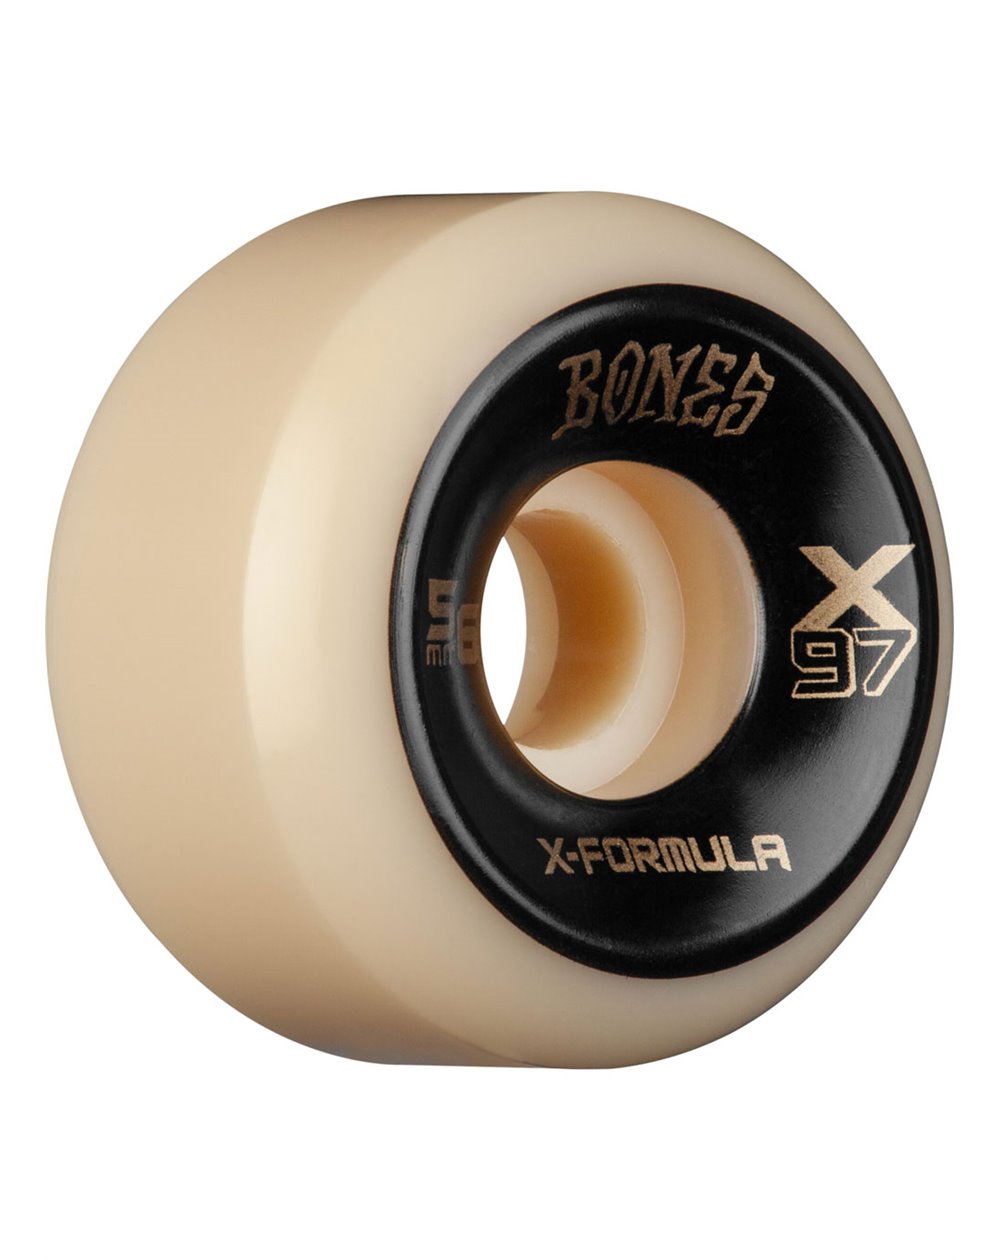 Bones Wheels X-Formula V6 Wide-Cut X-Ninety-Seven 56mm 97A Skateboard Wheels pack of 4